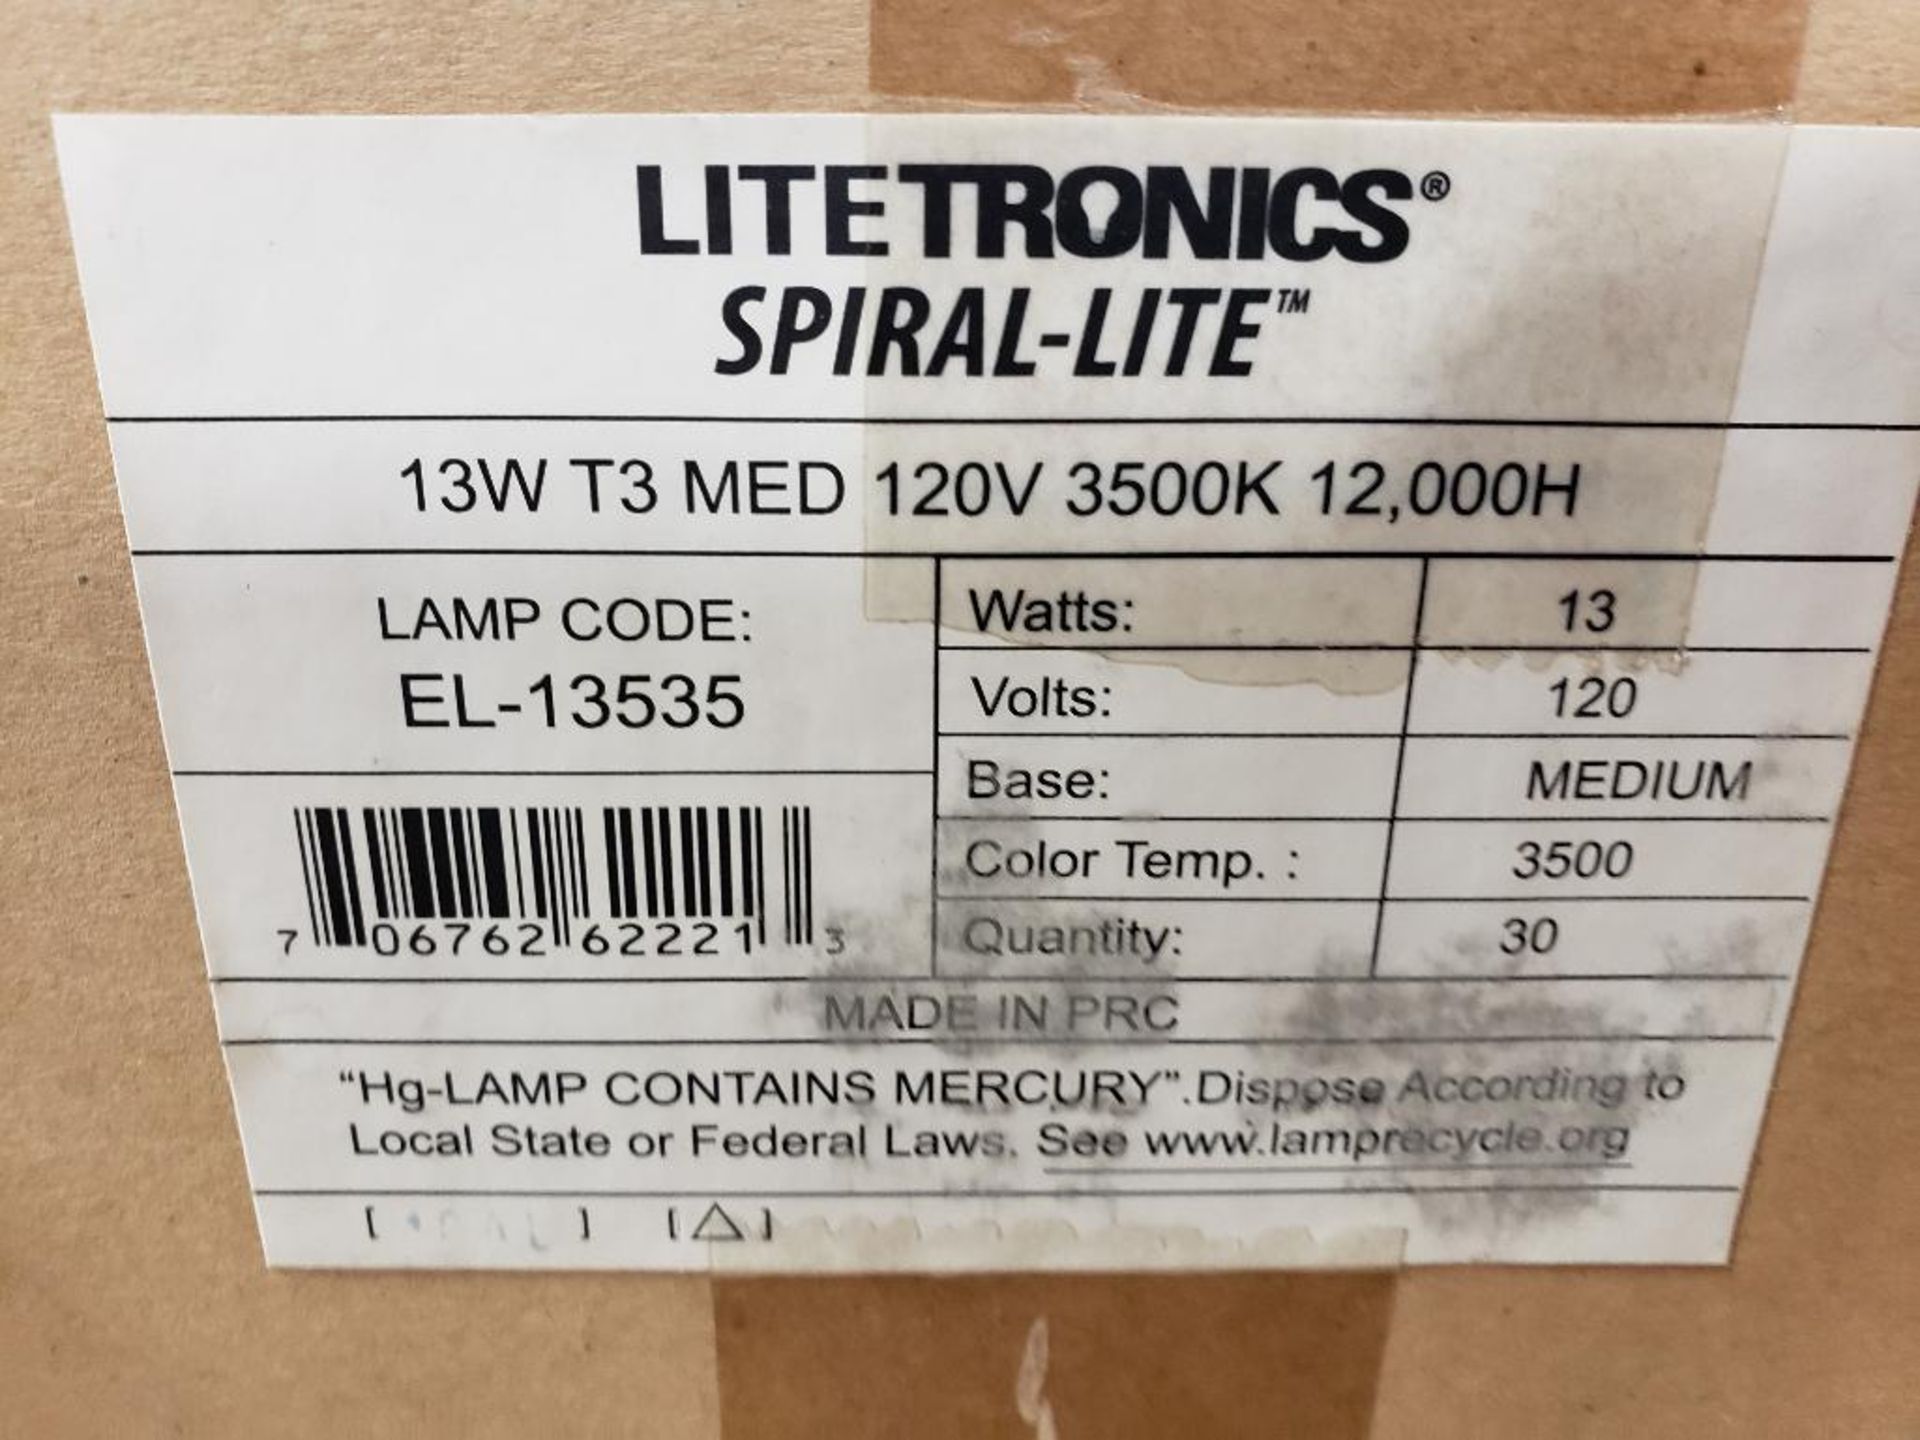 Qty 60 - Litetronics Spiral-Lite. Lamp code EL-13535. New in bulk boxes. - Image 2 of 2